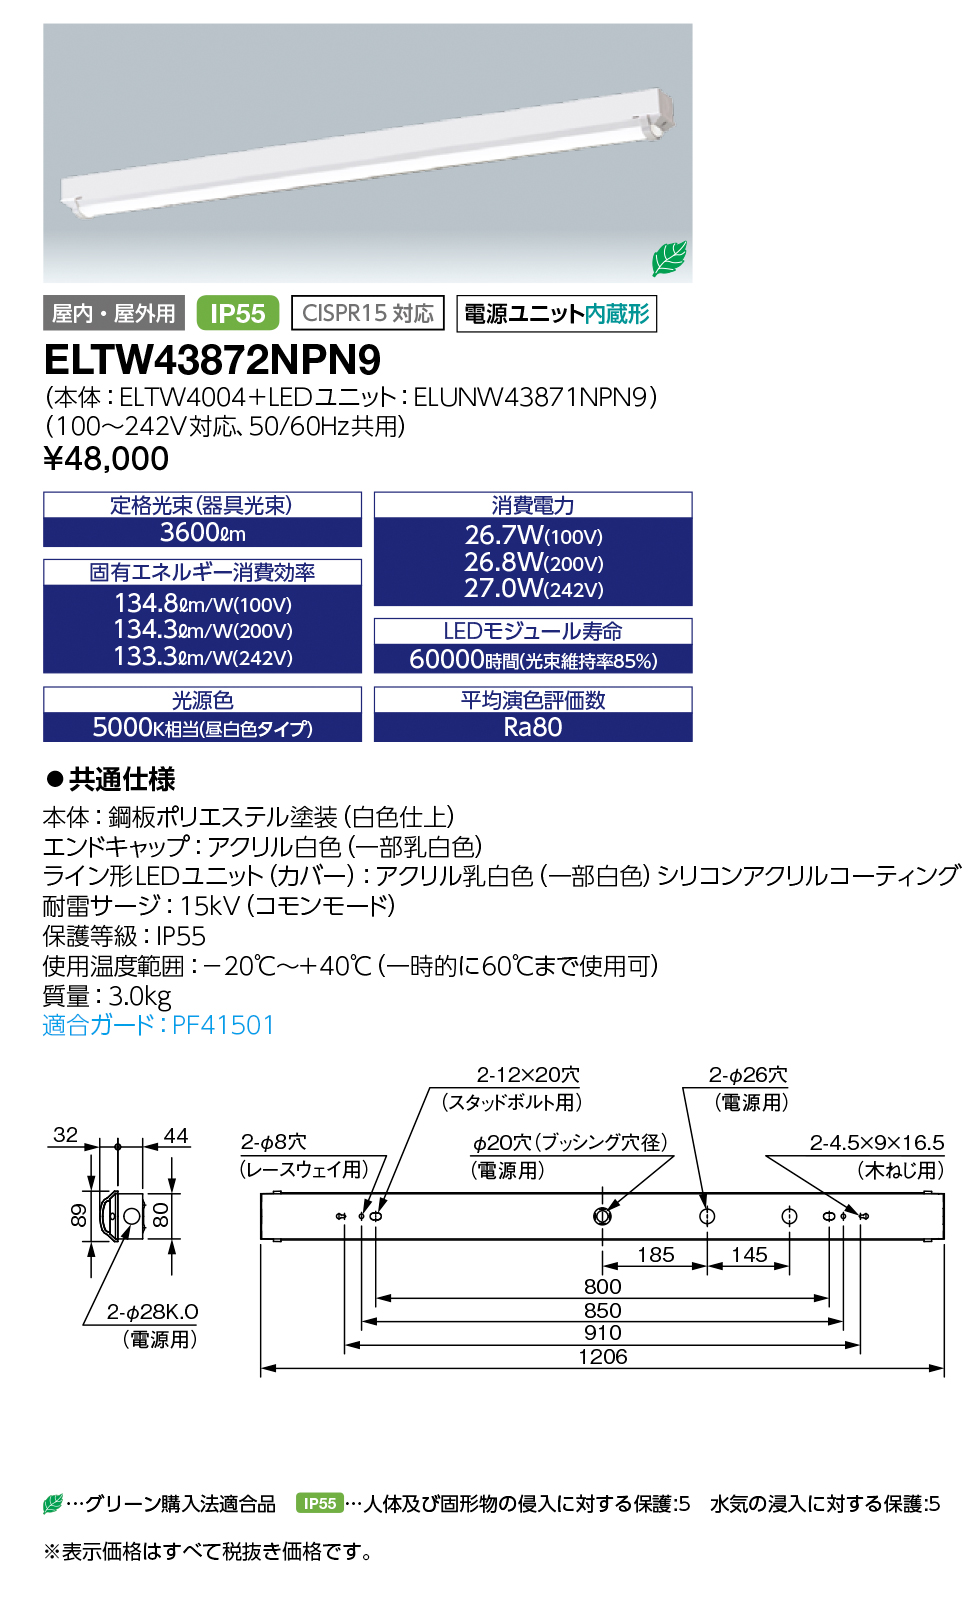 ELTW43872NPN9